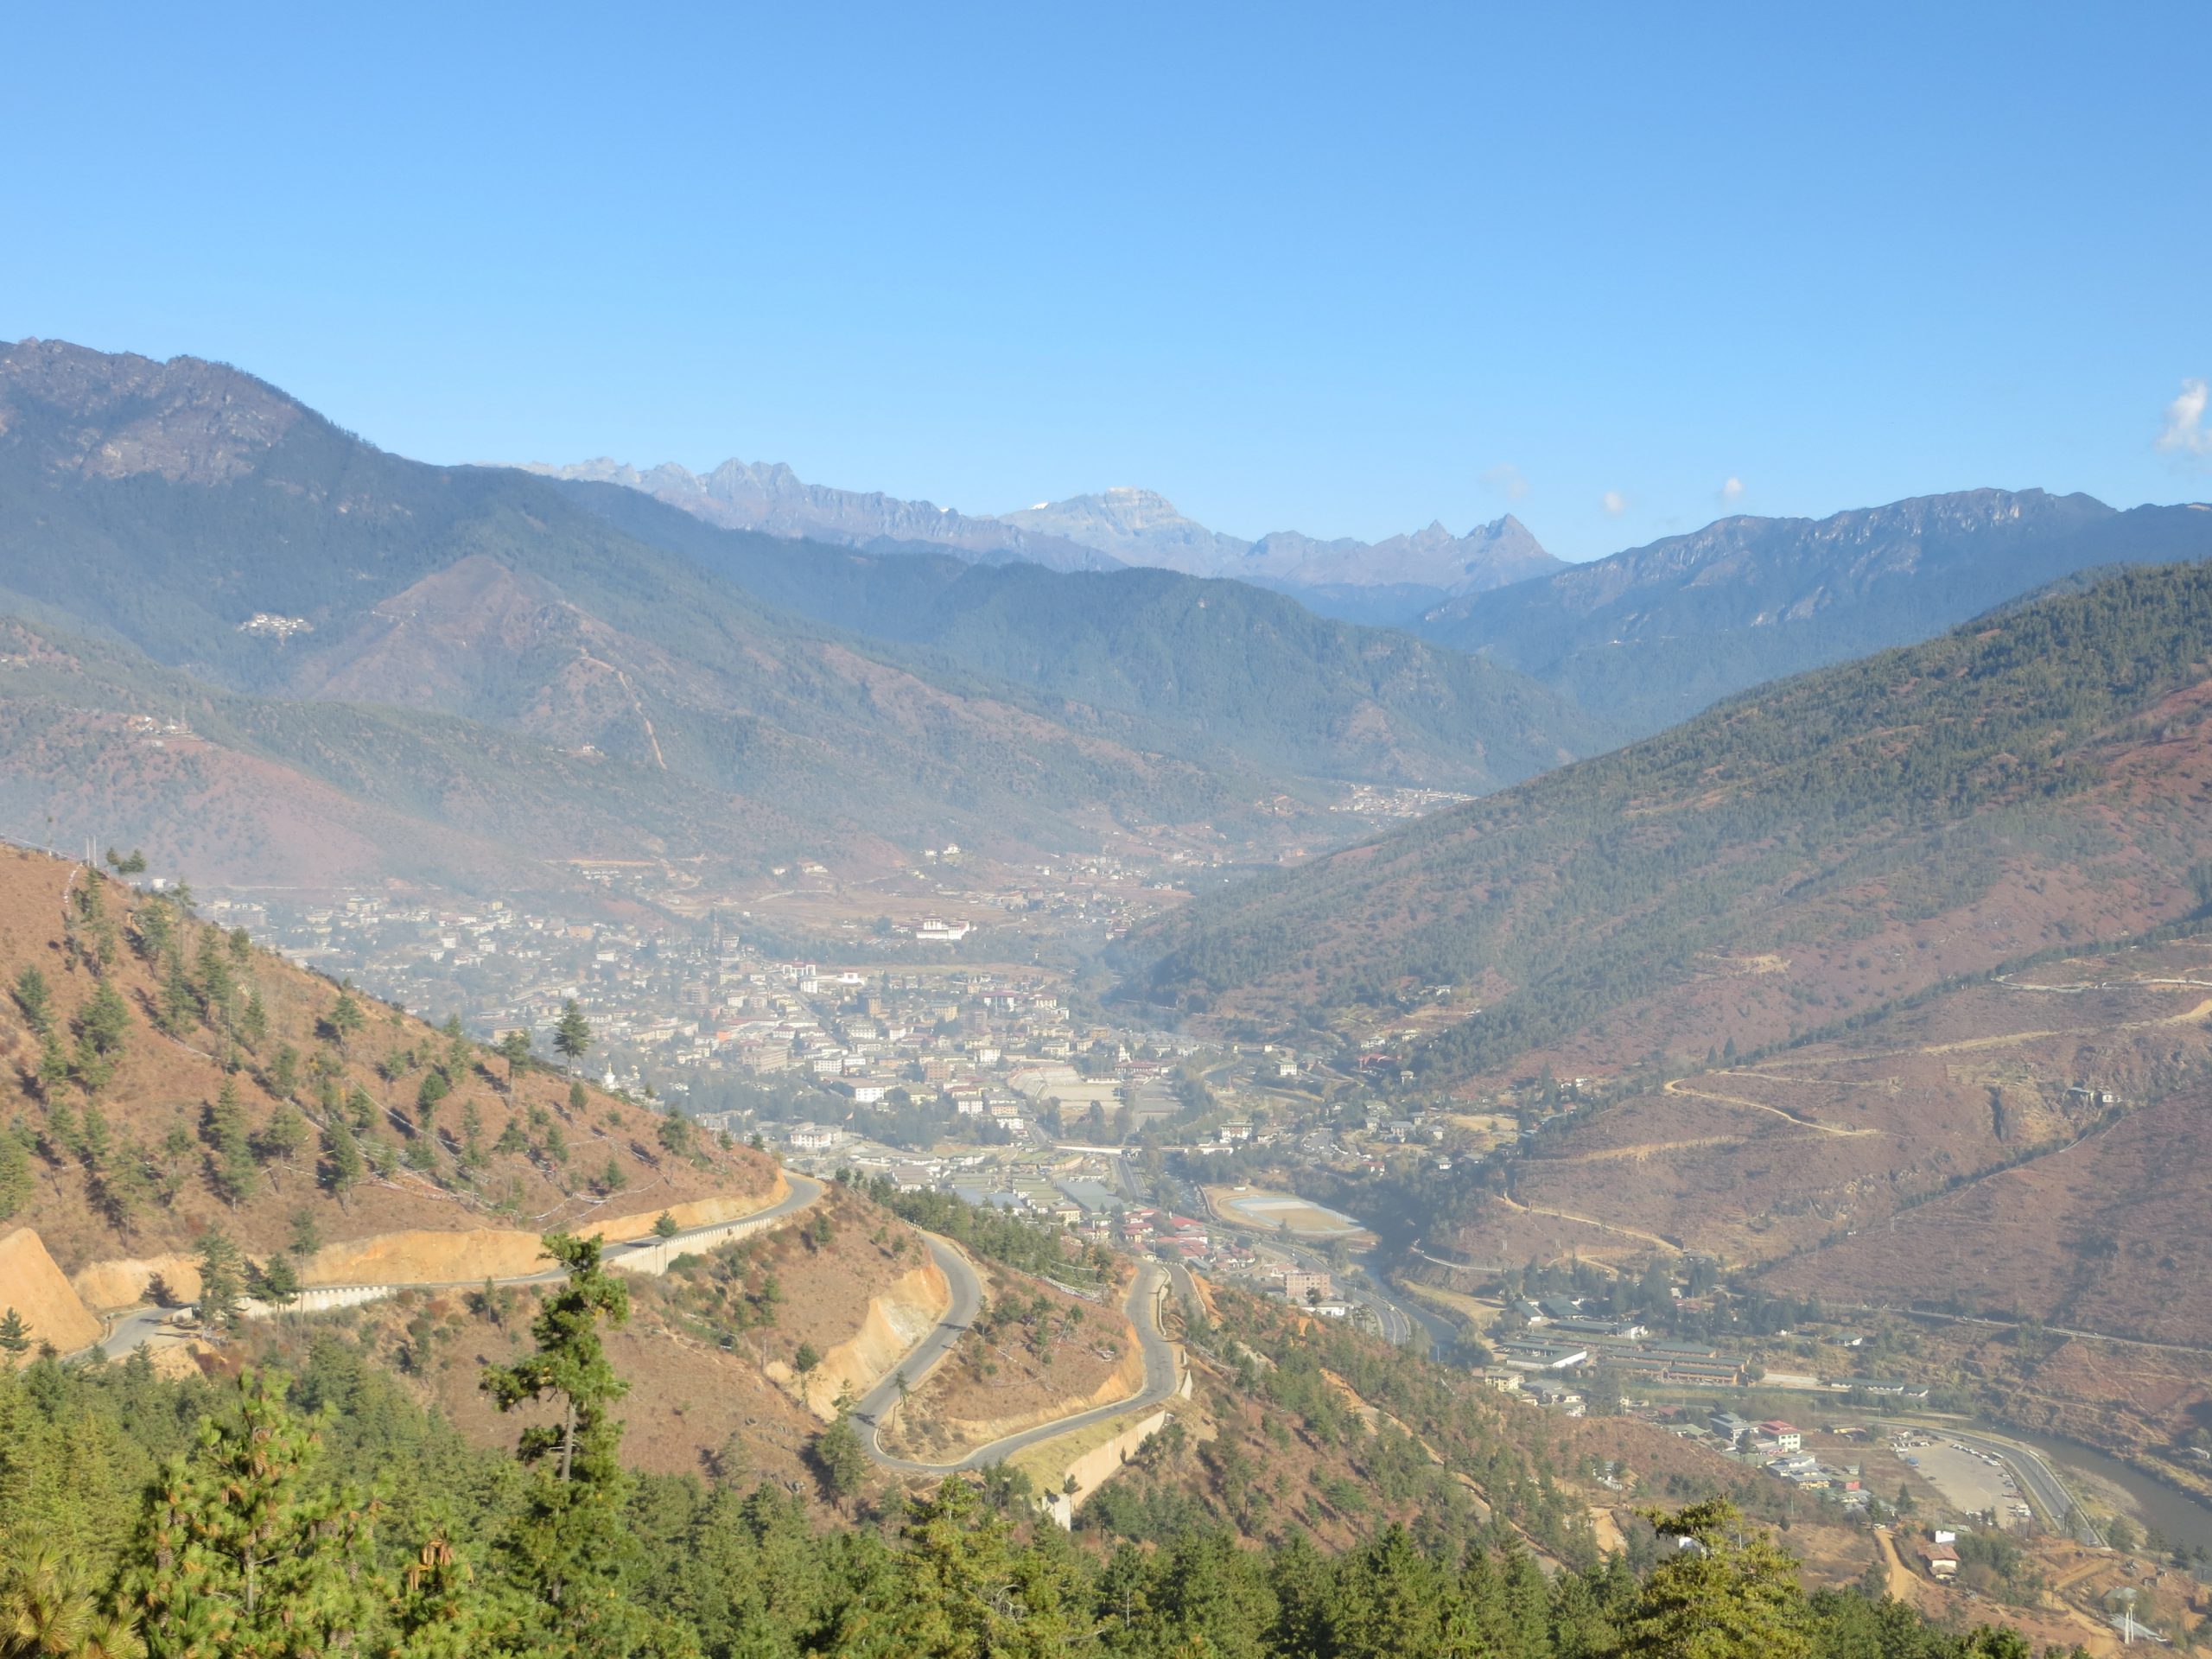 A view of Thimpu, Bhutan's capital